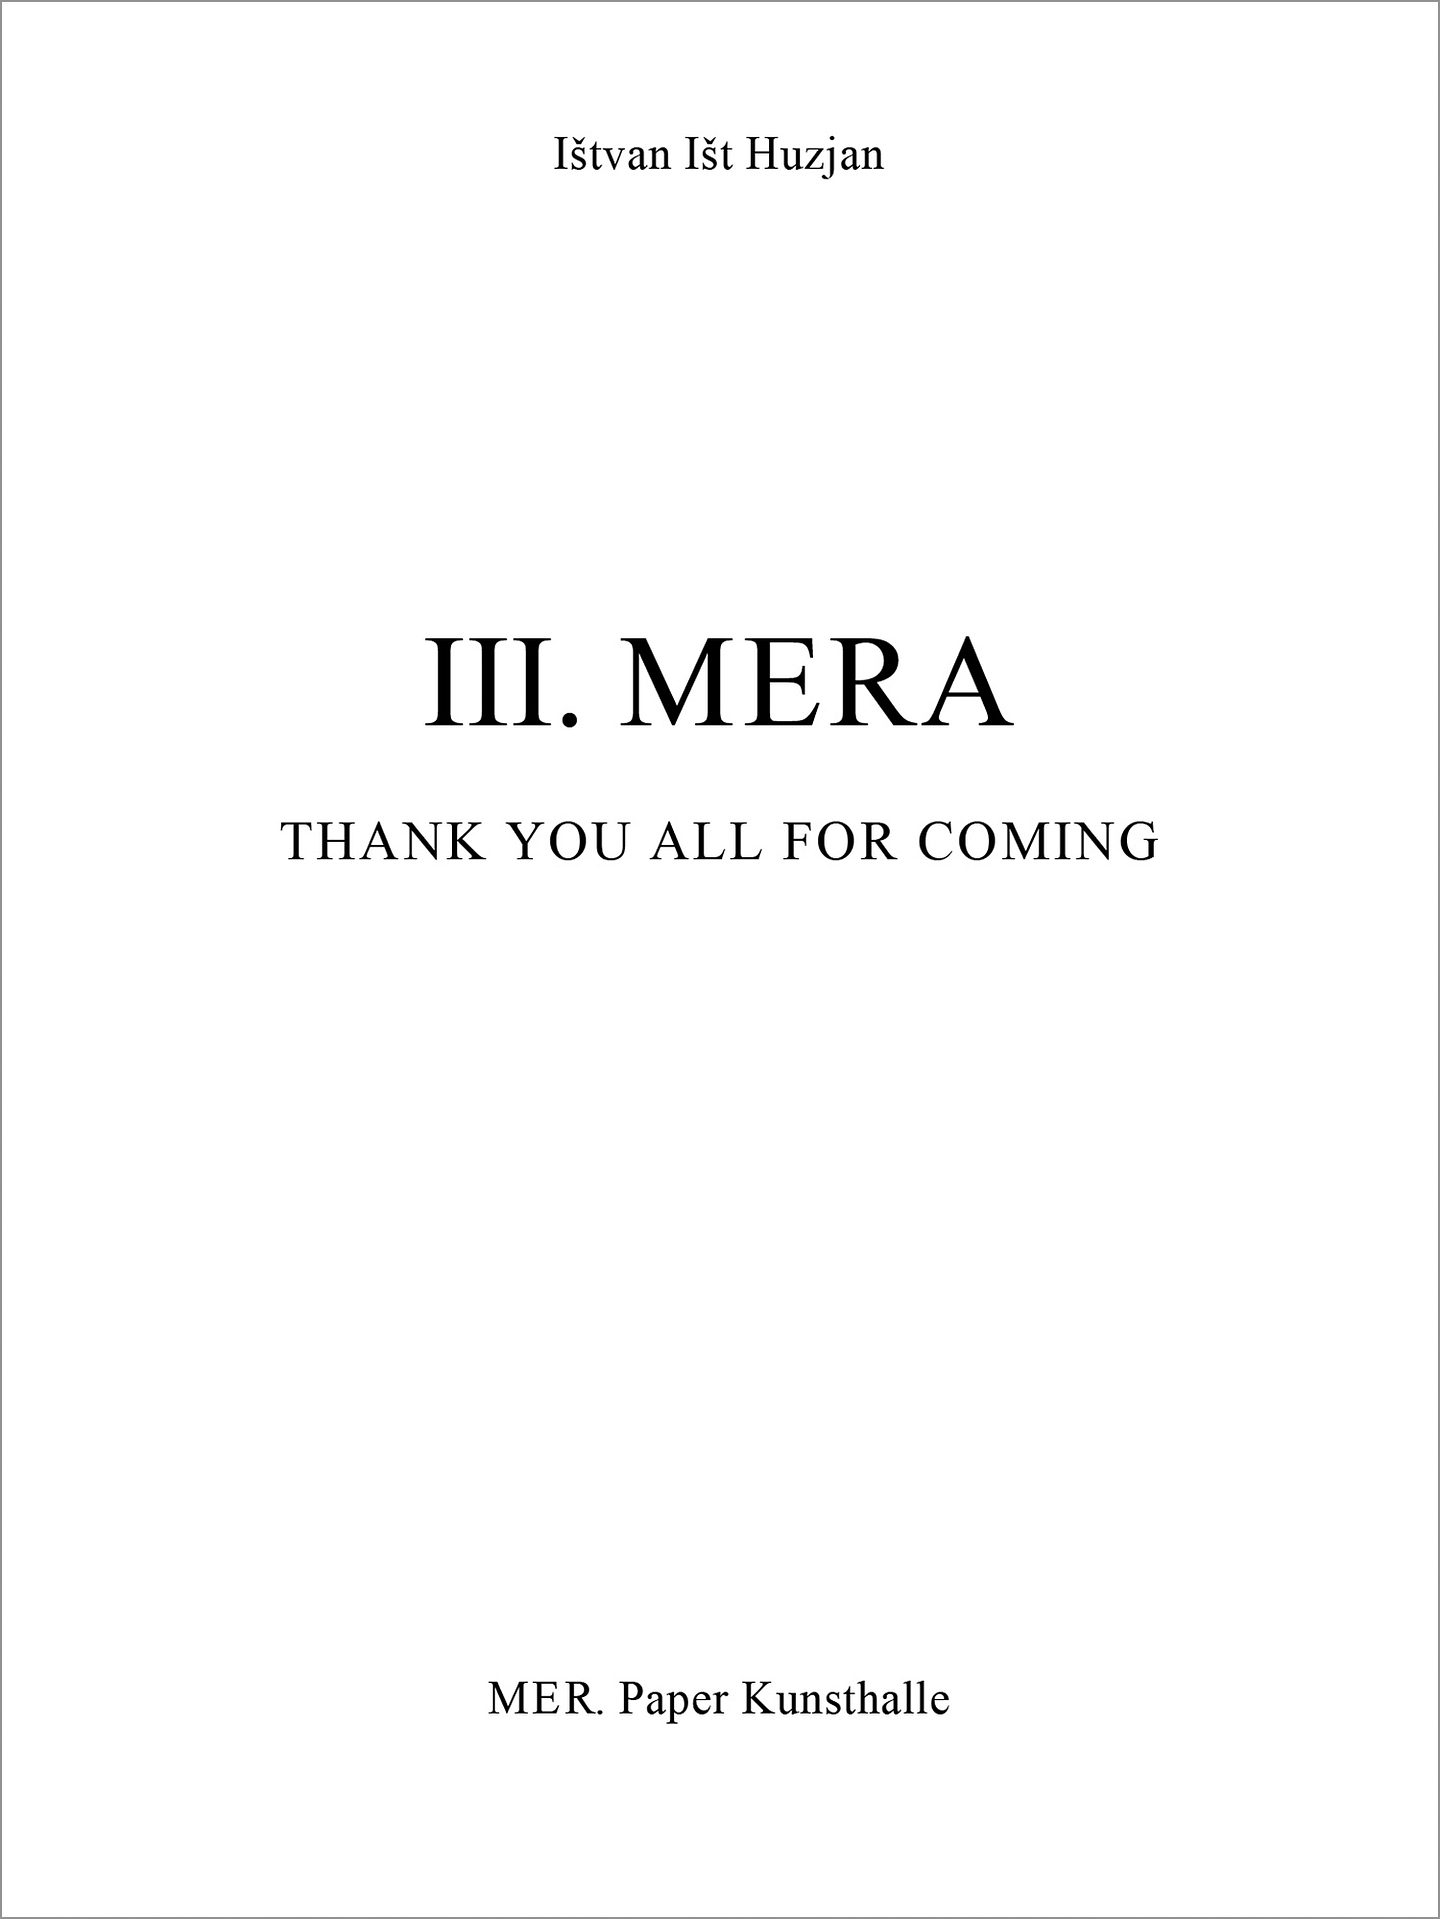 III MERA COVER 1500 PX